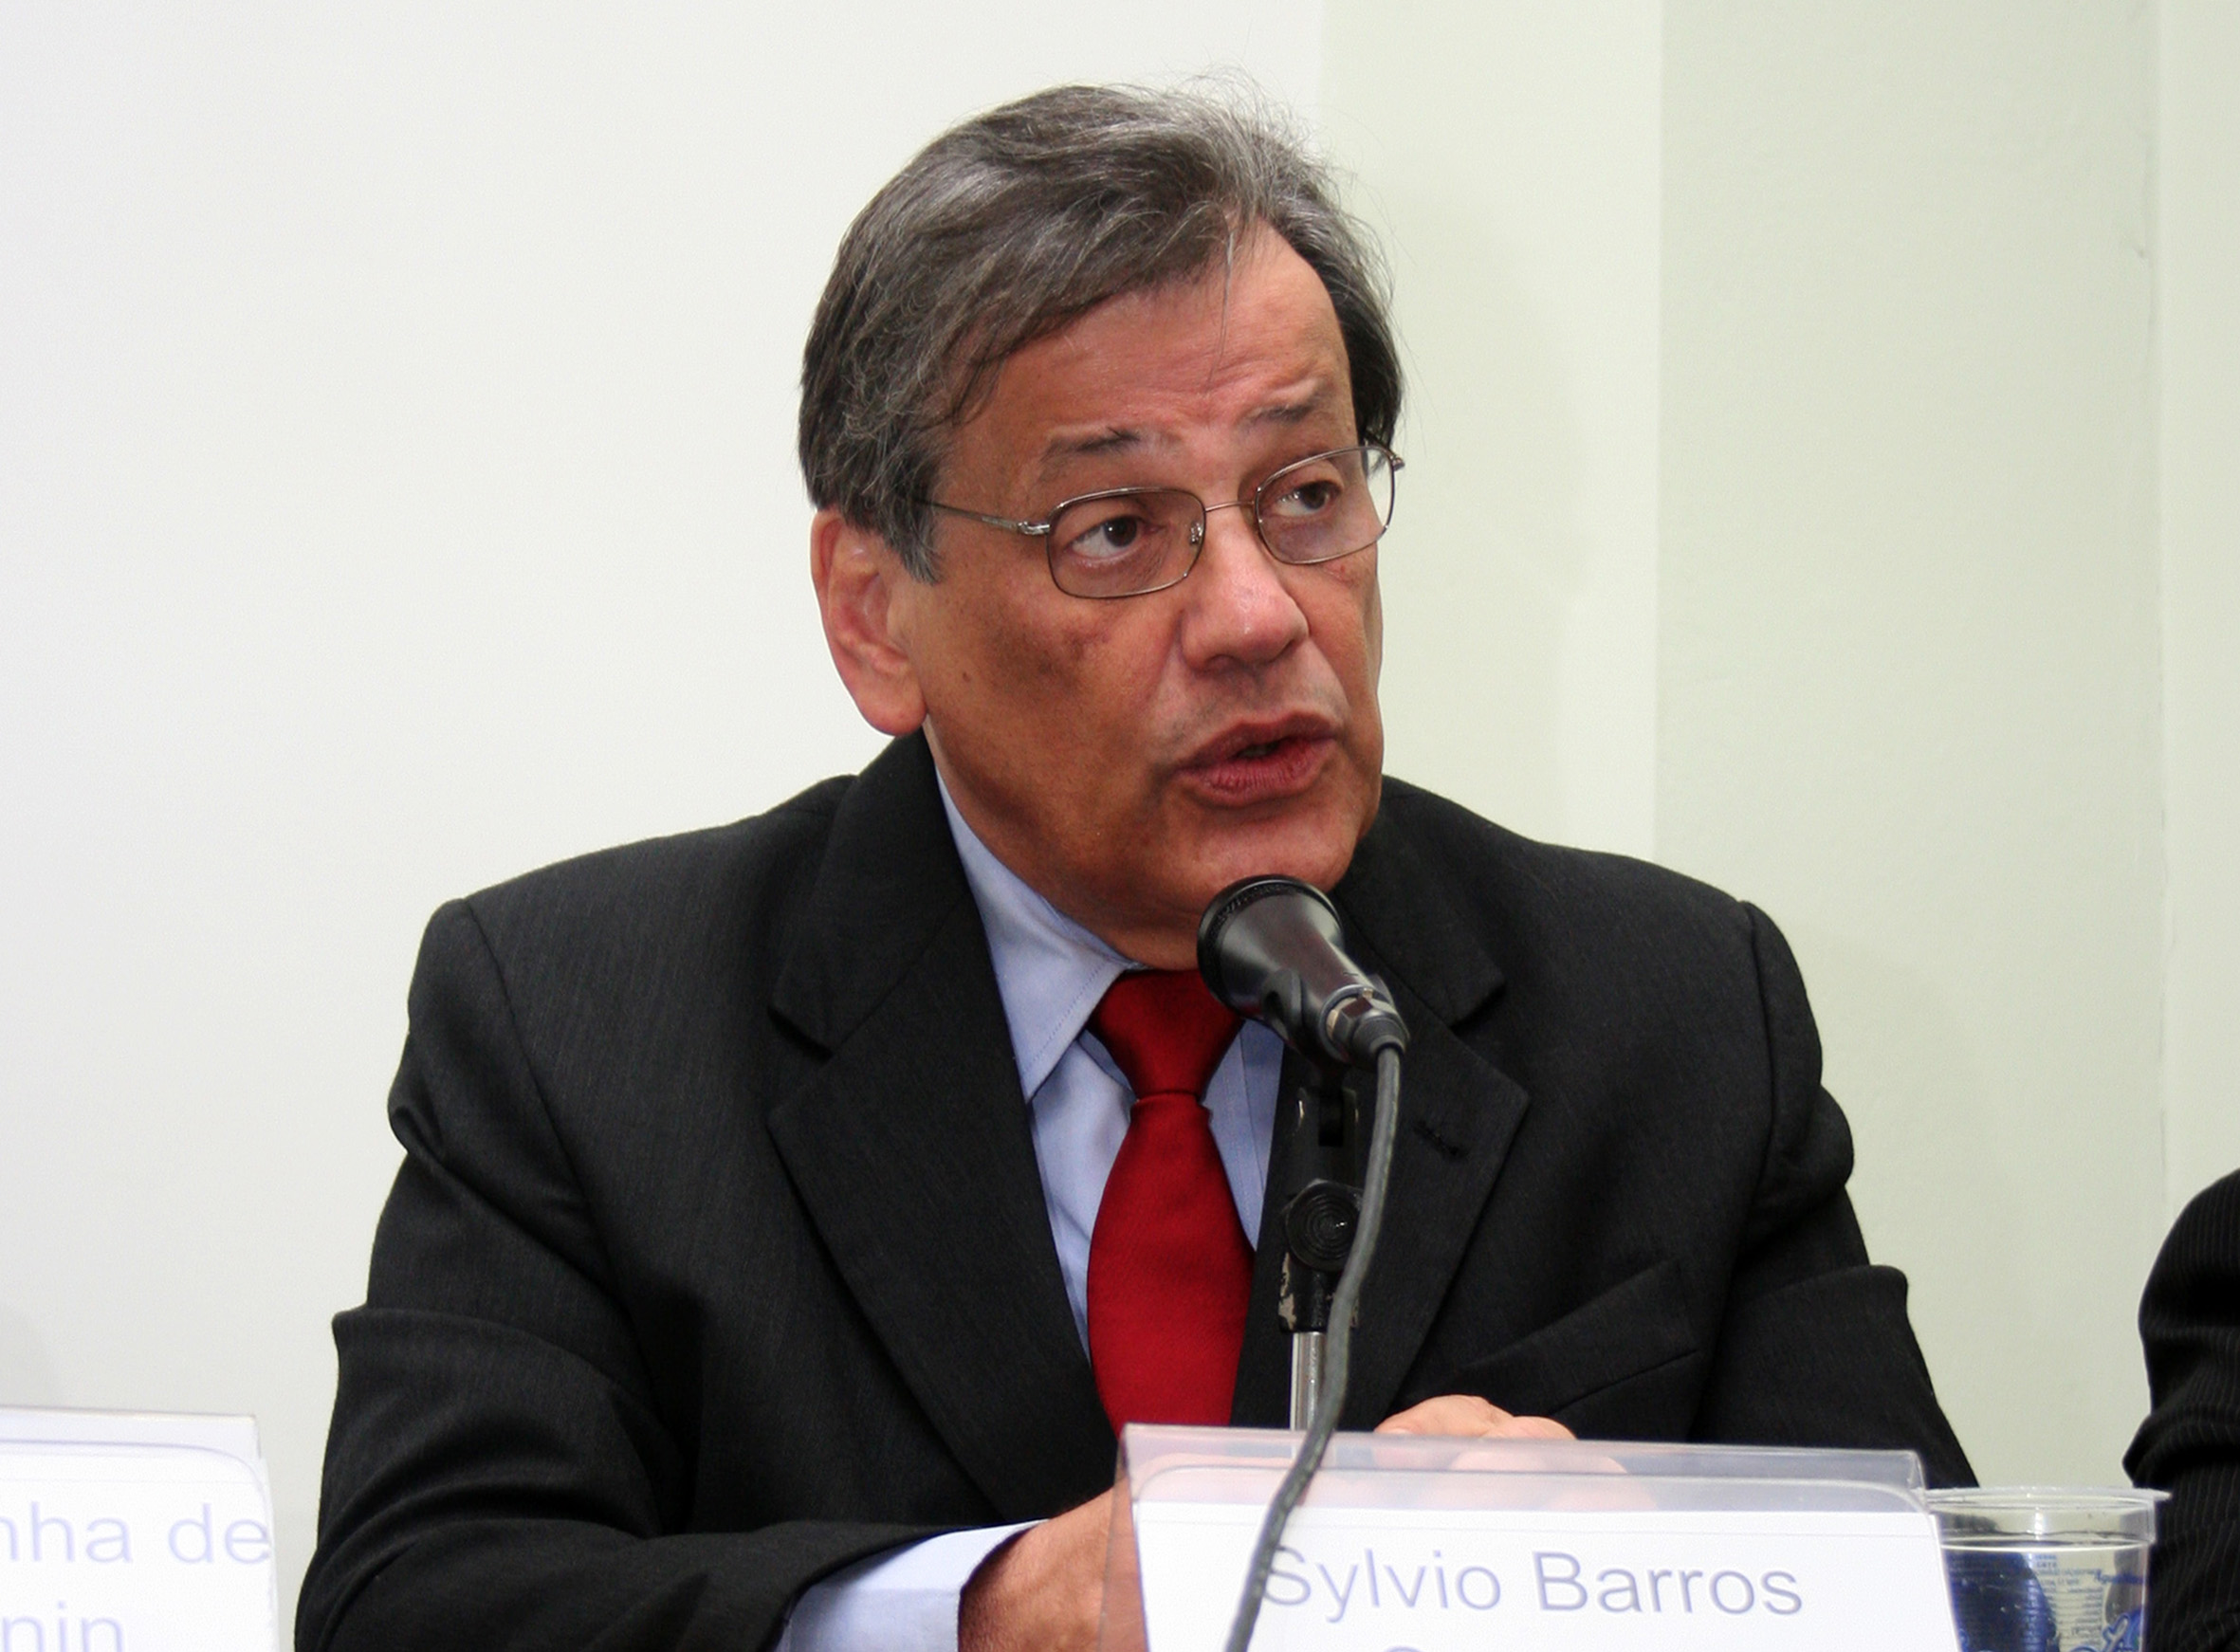 Silvio Barros Sawaya